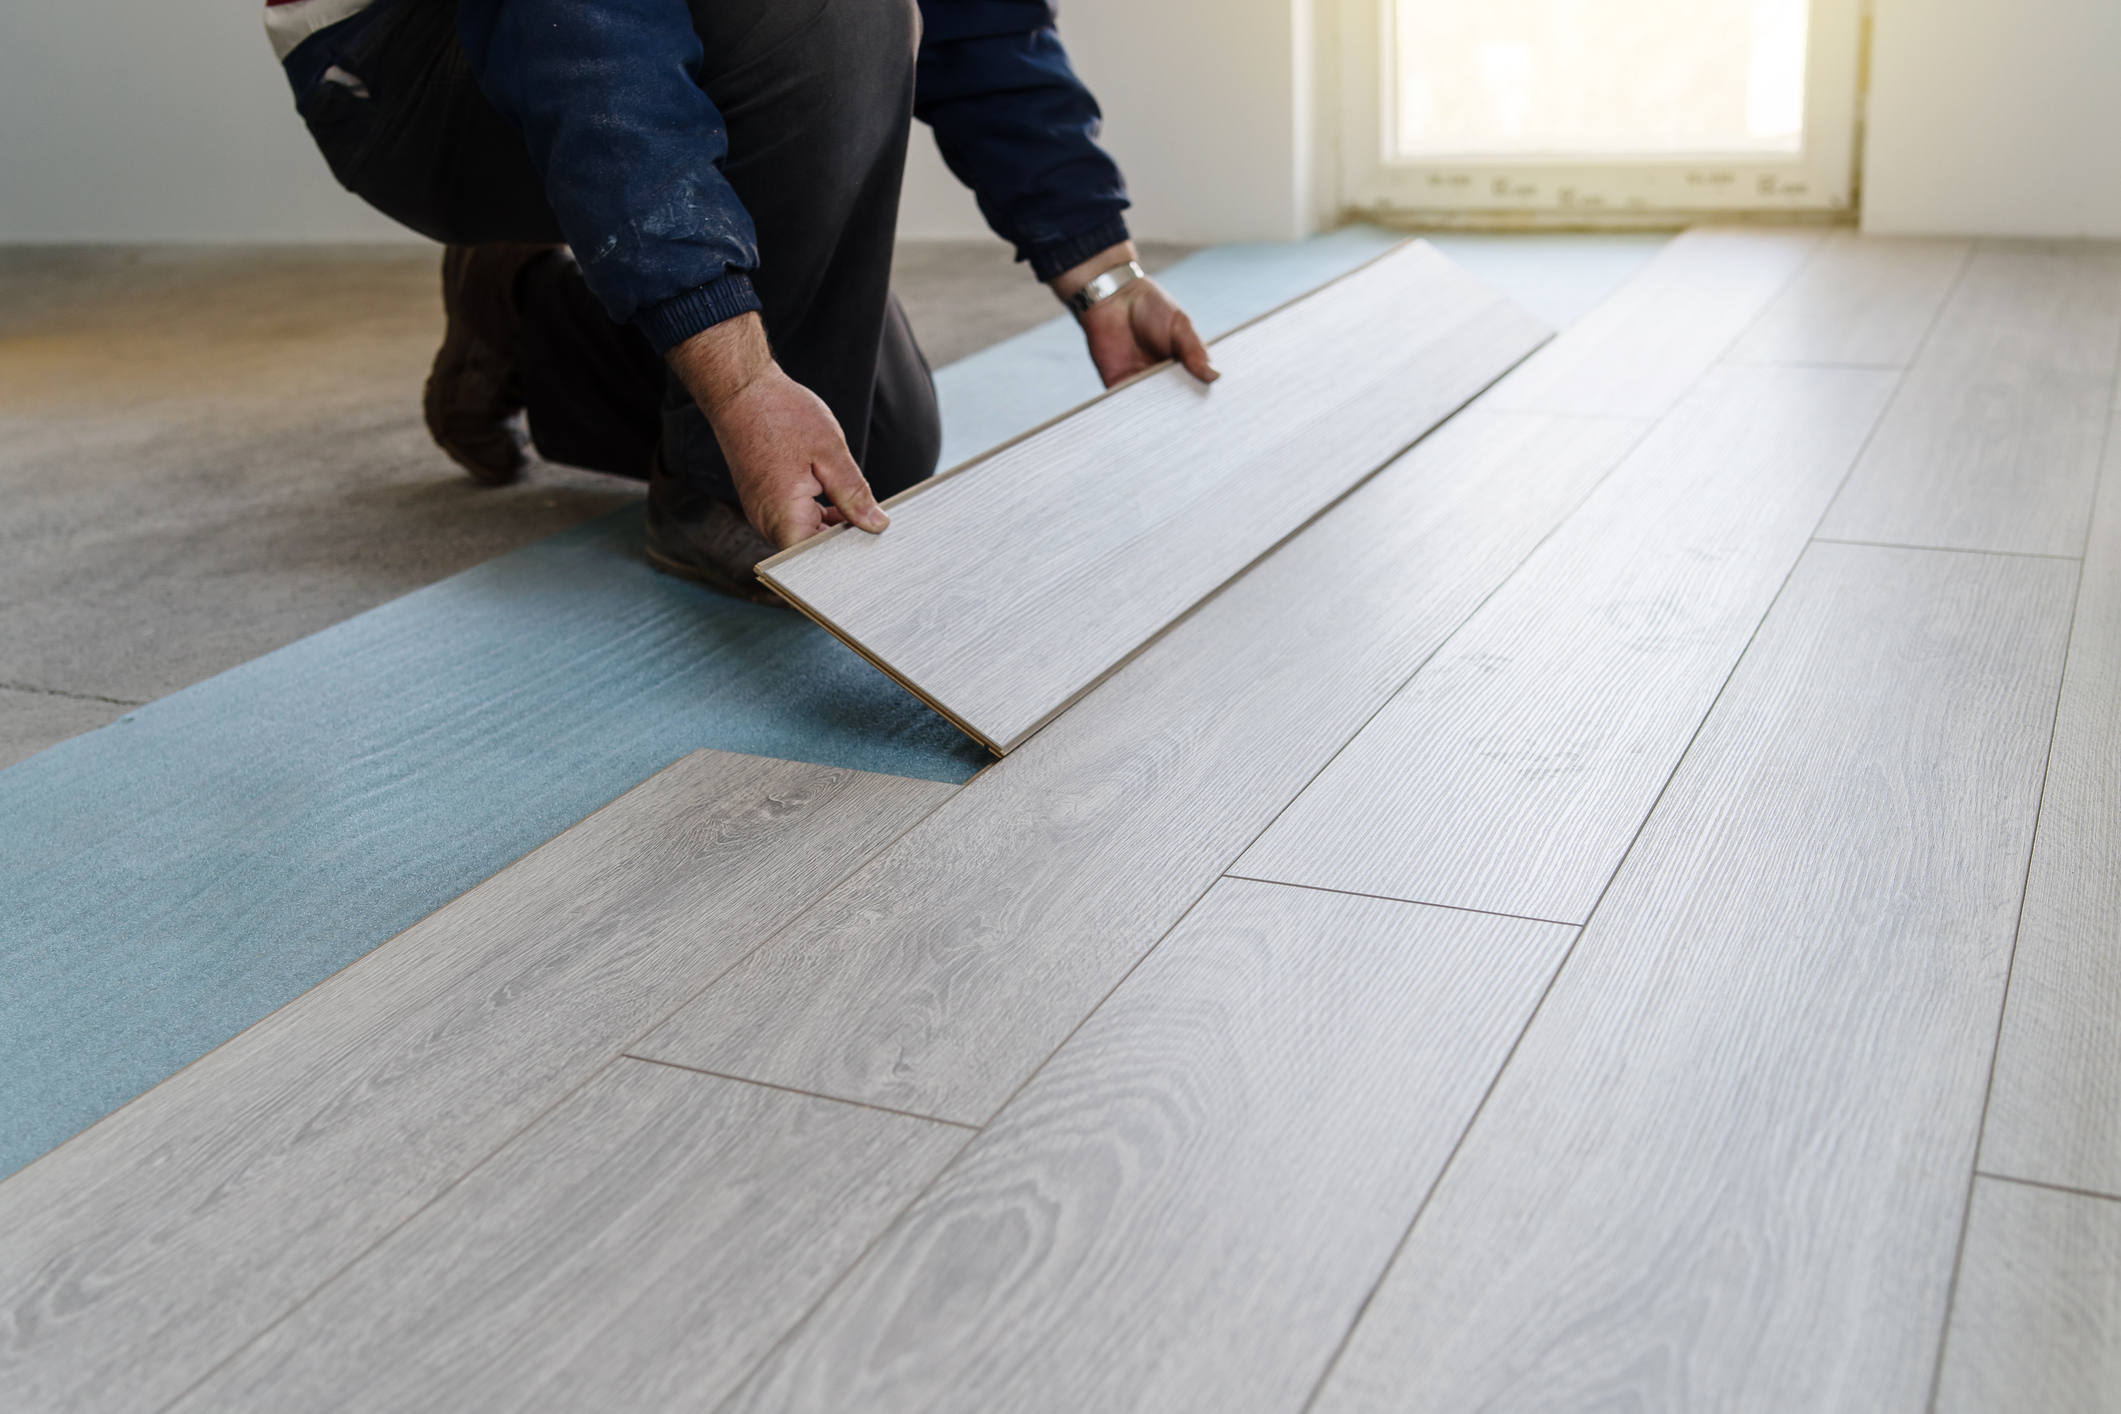 Temporary Flooring Ideas, Laminate Flooring Carpet